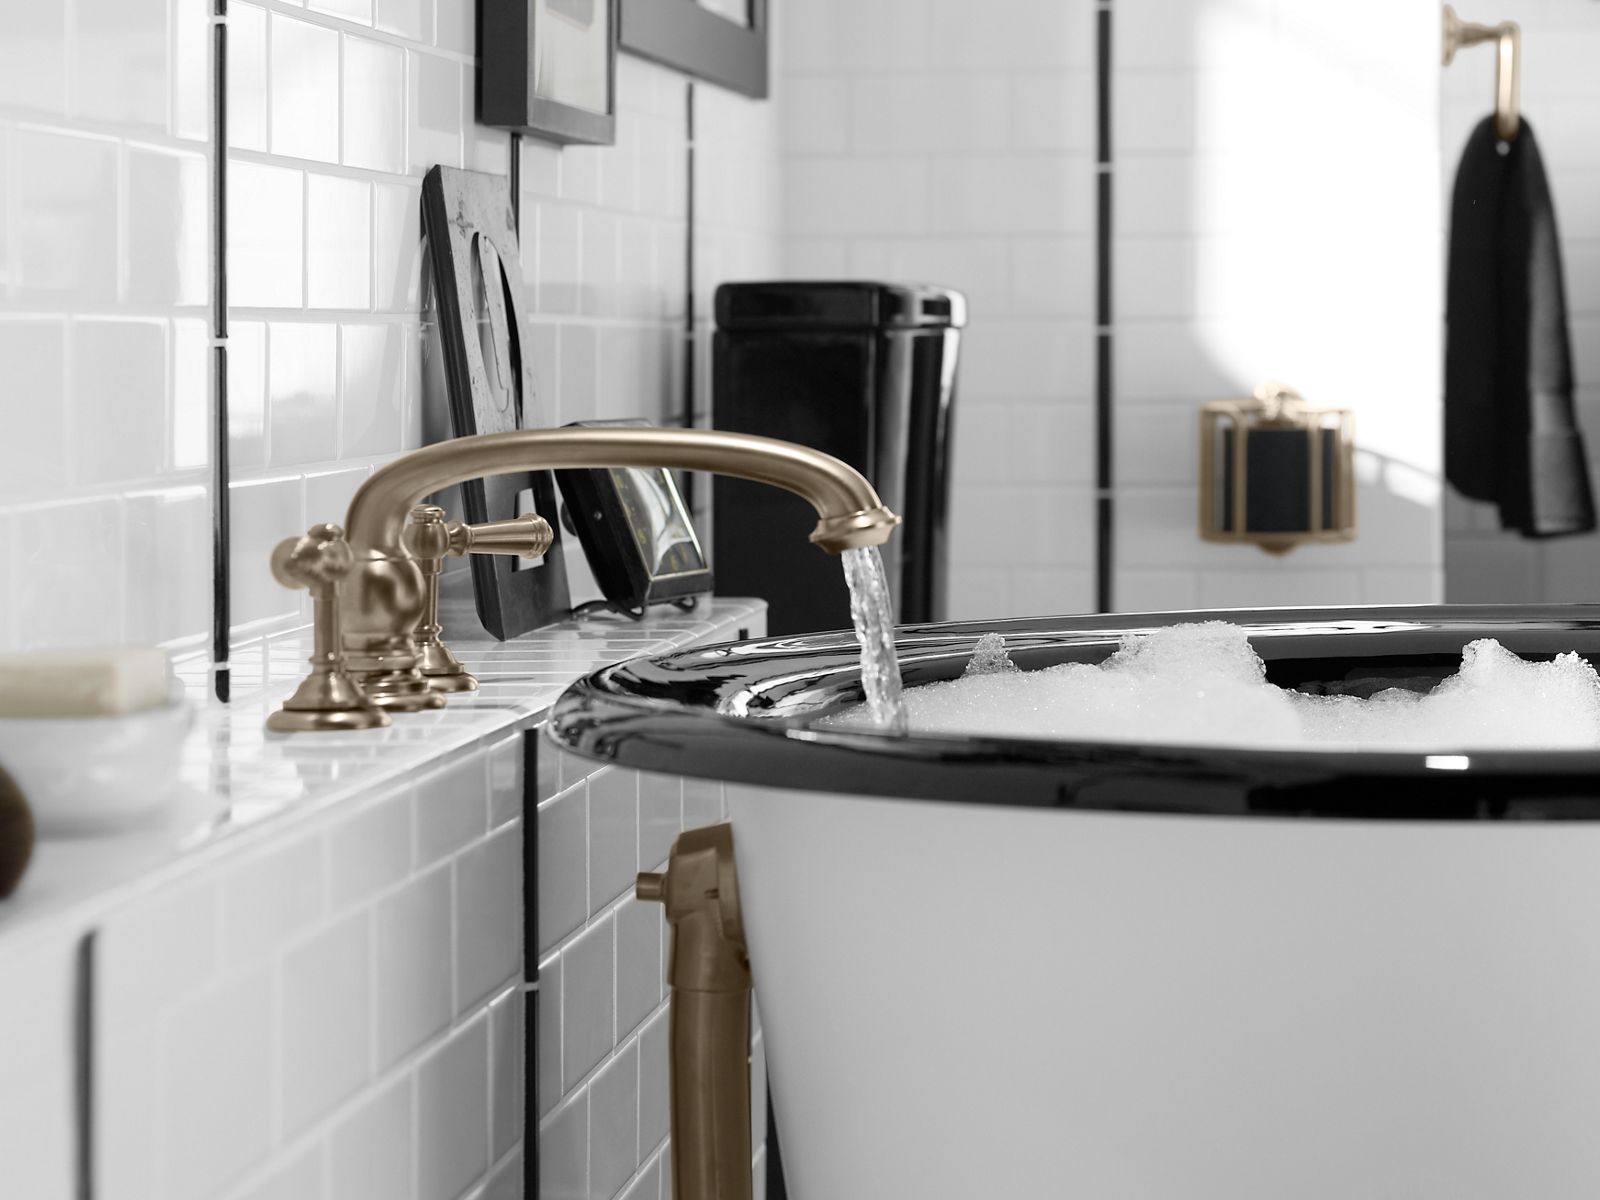 Installation Bathtub Faucets Guide Kohler